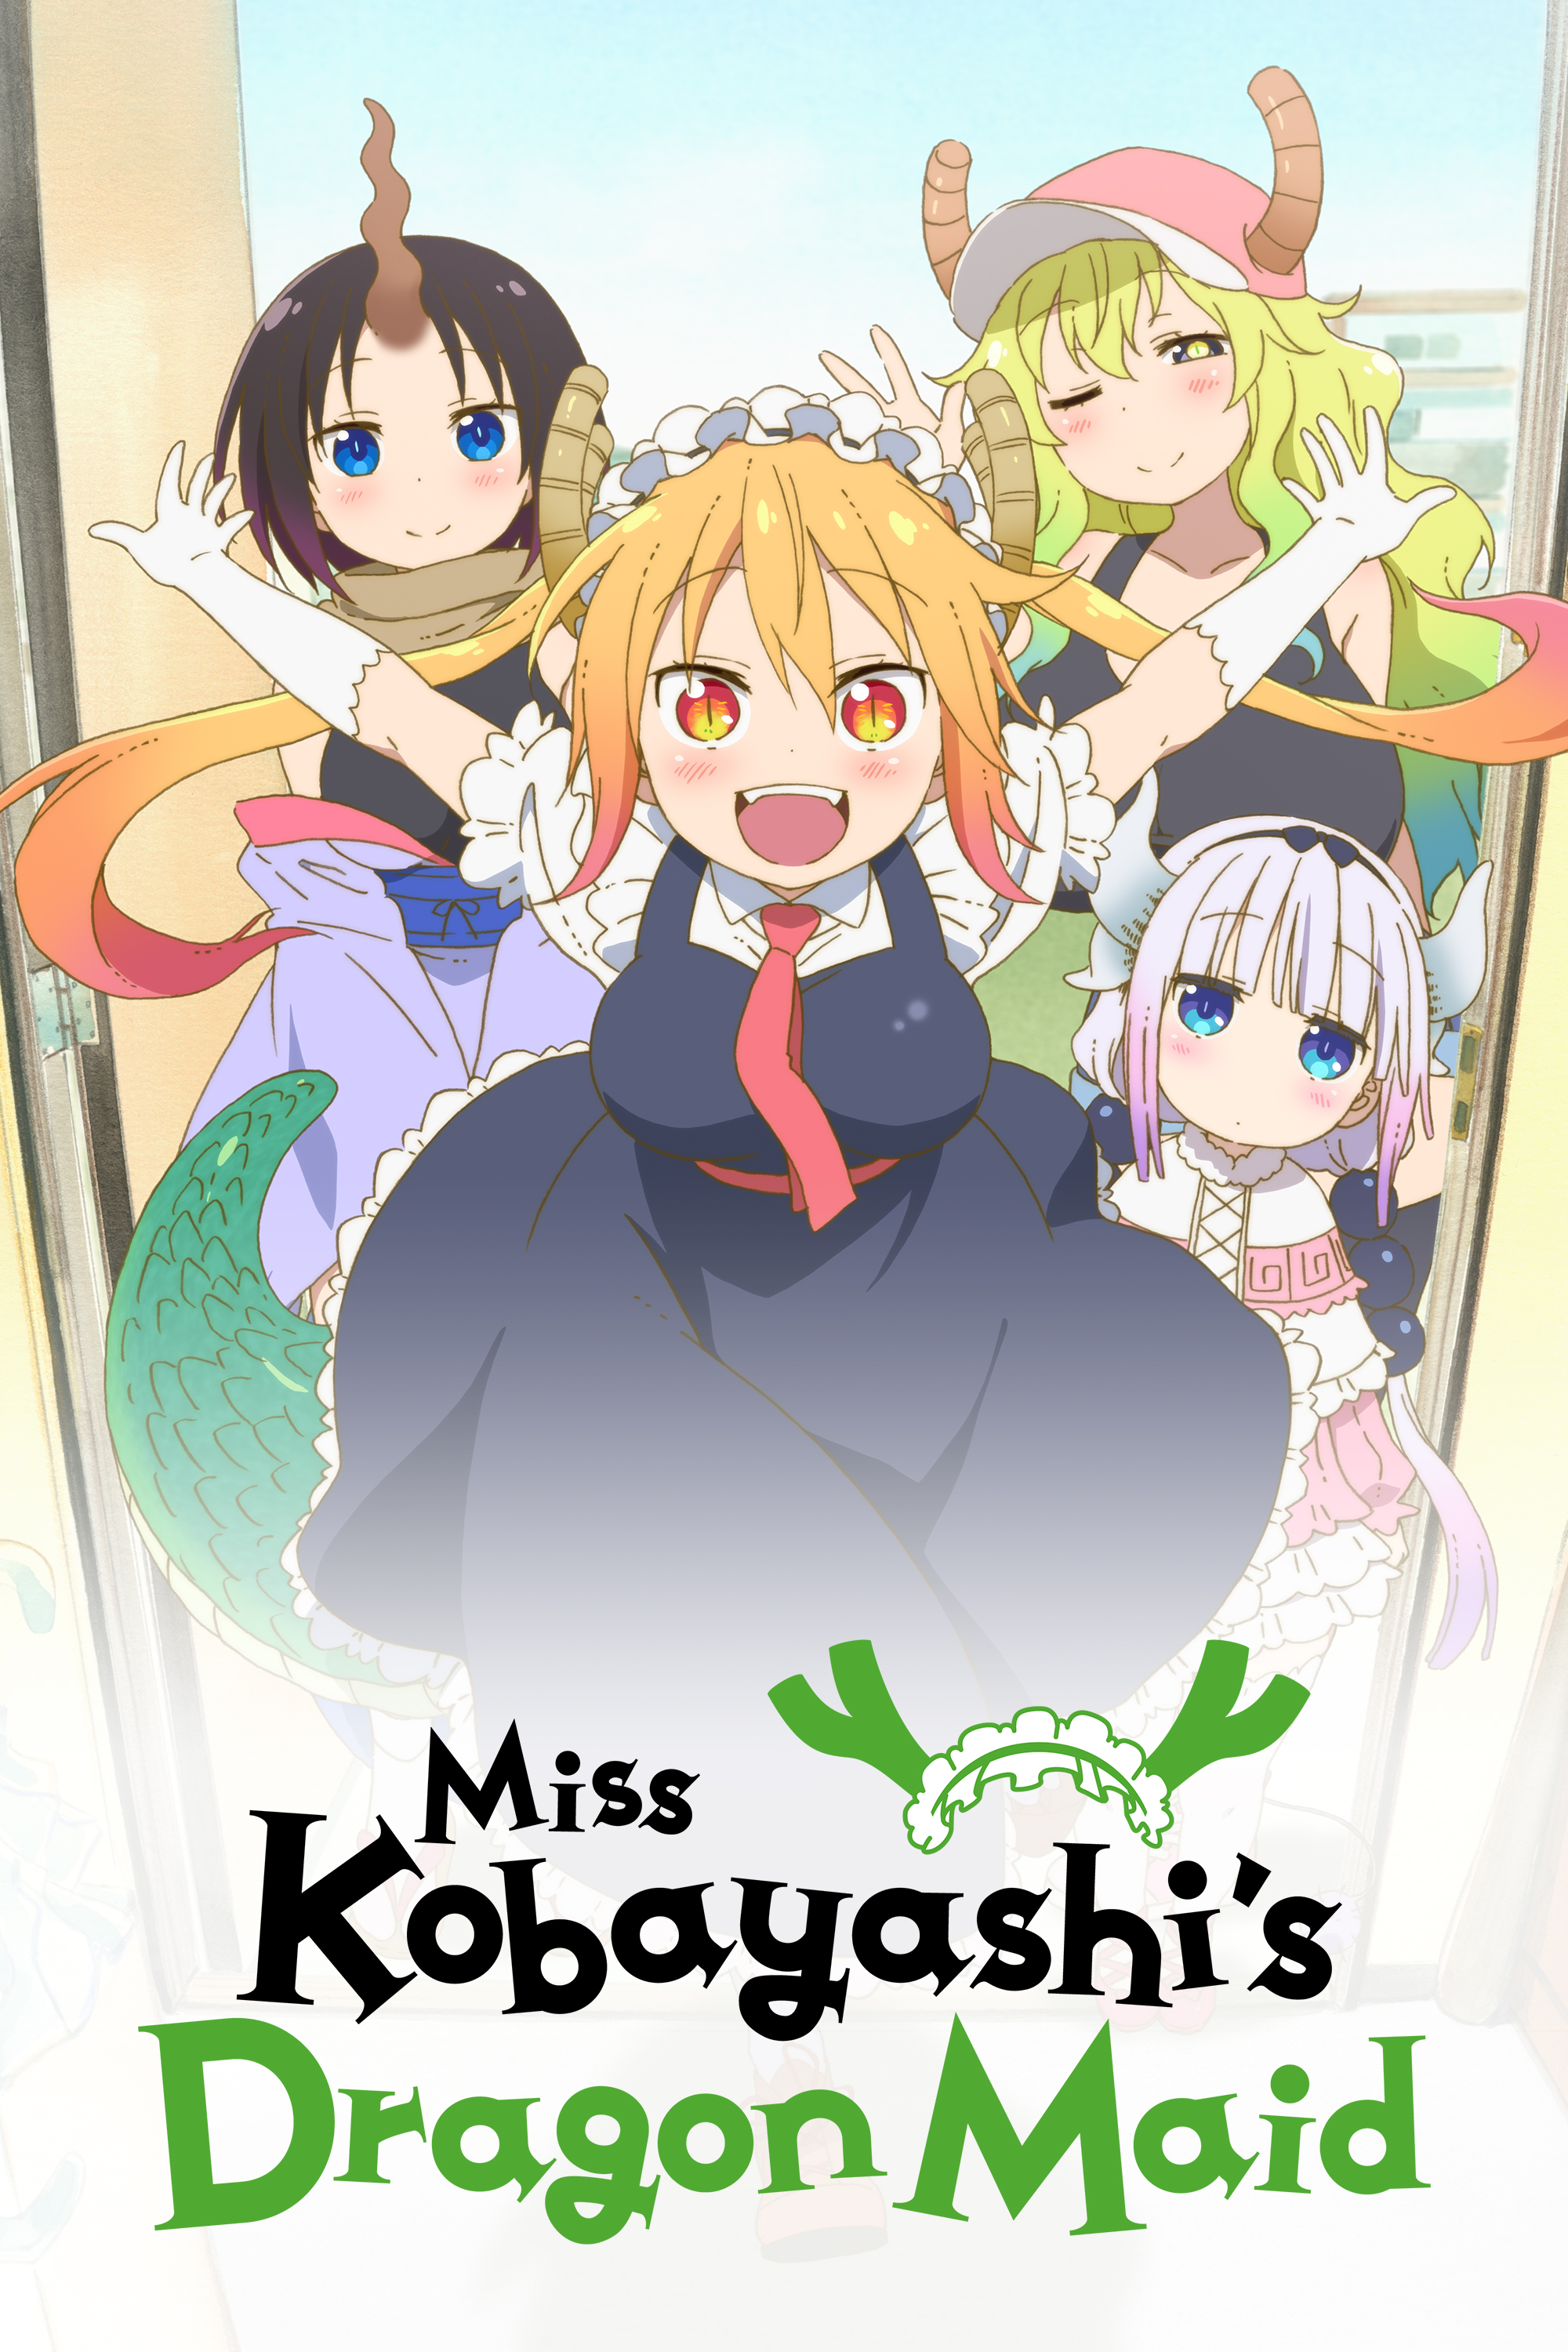 Miss Kobayashi's Dragon Maid S Episode 11 Preview - Anime Corner